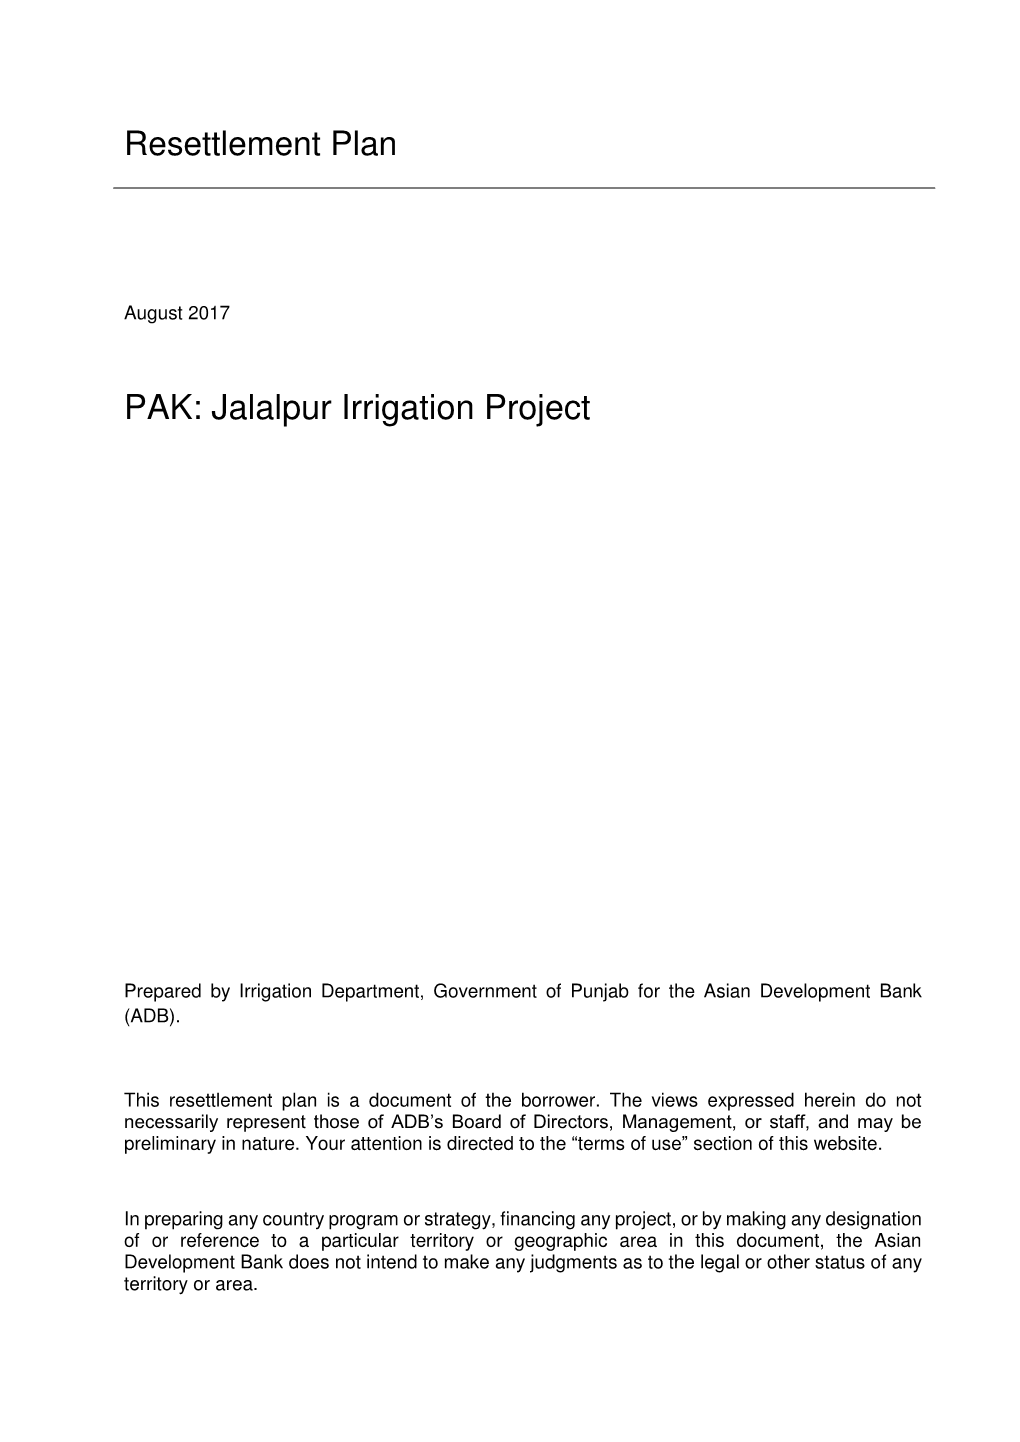 Jalalpur Irrigation Project